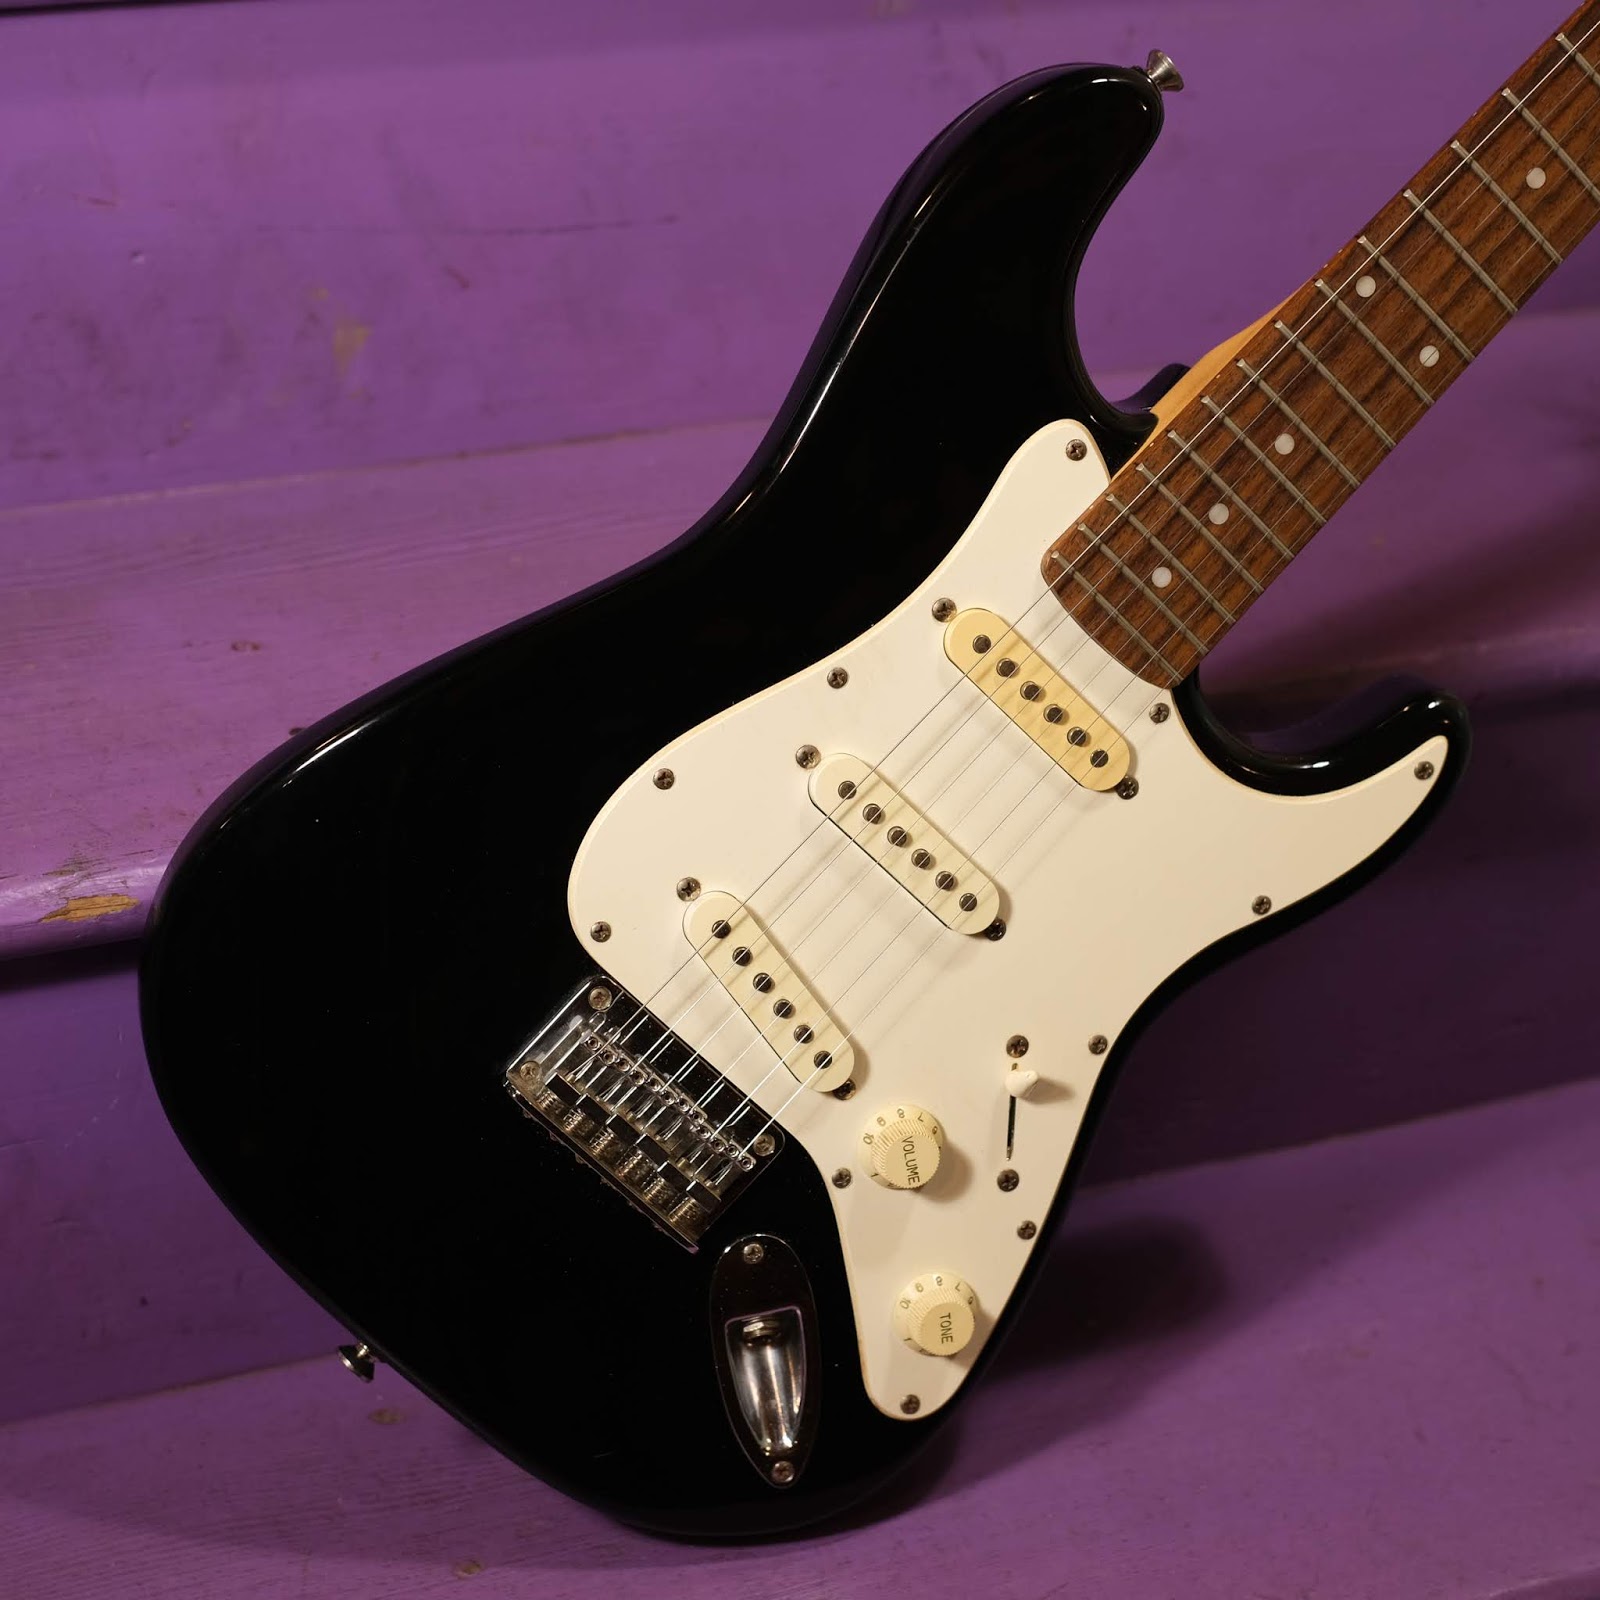 2004 Squier Mini Stratocaster Electric Guitar (Nashville Tuning)